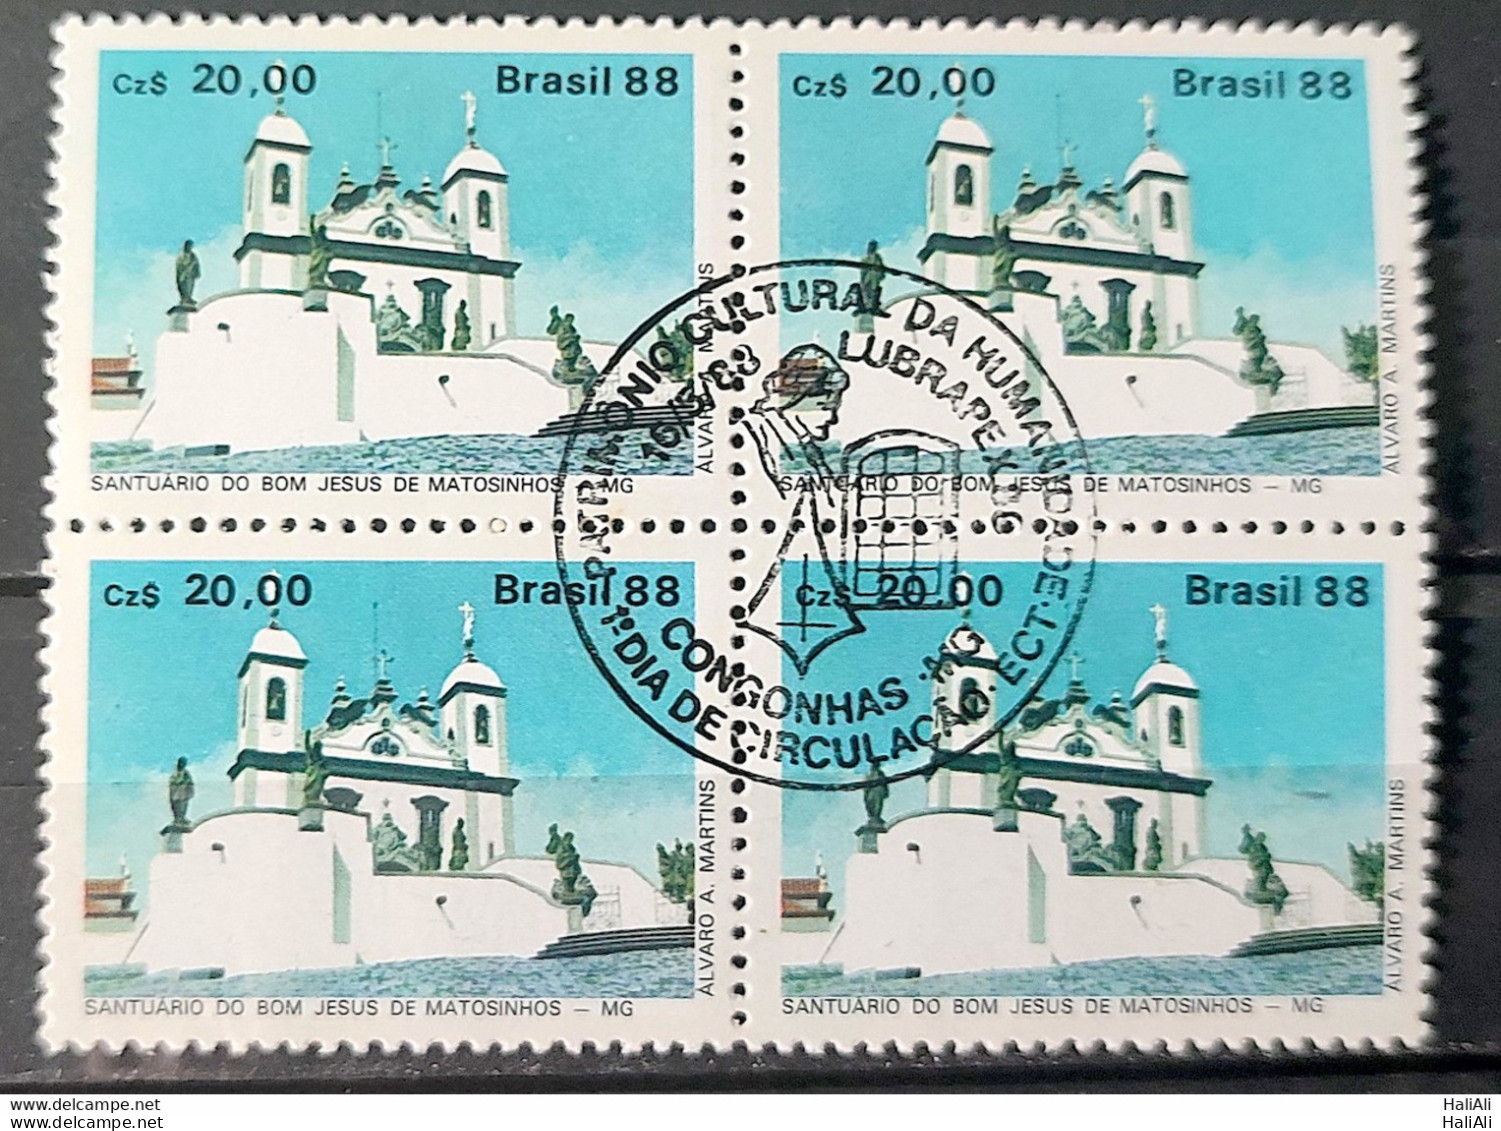 C 1585 Brazil Stamp Lubrapex Portugal Bom Jesus De Matosinhos 1988 Block Of 4 CBC MG - Ongebruikt